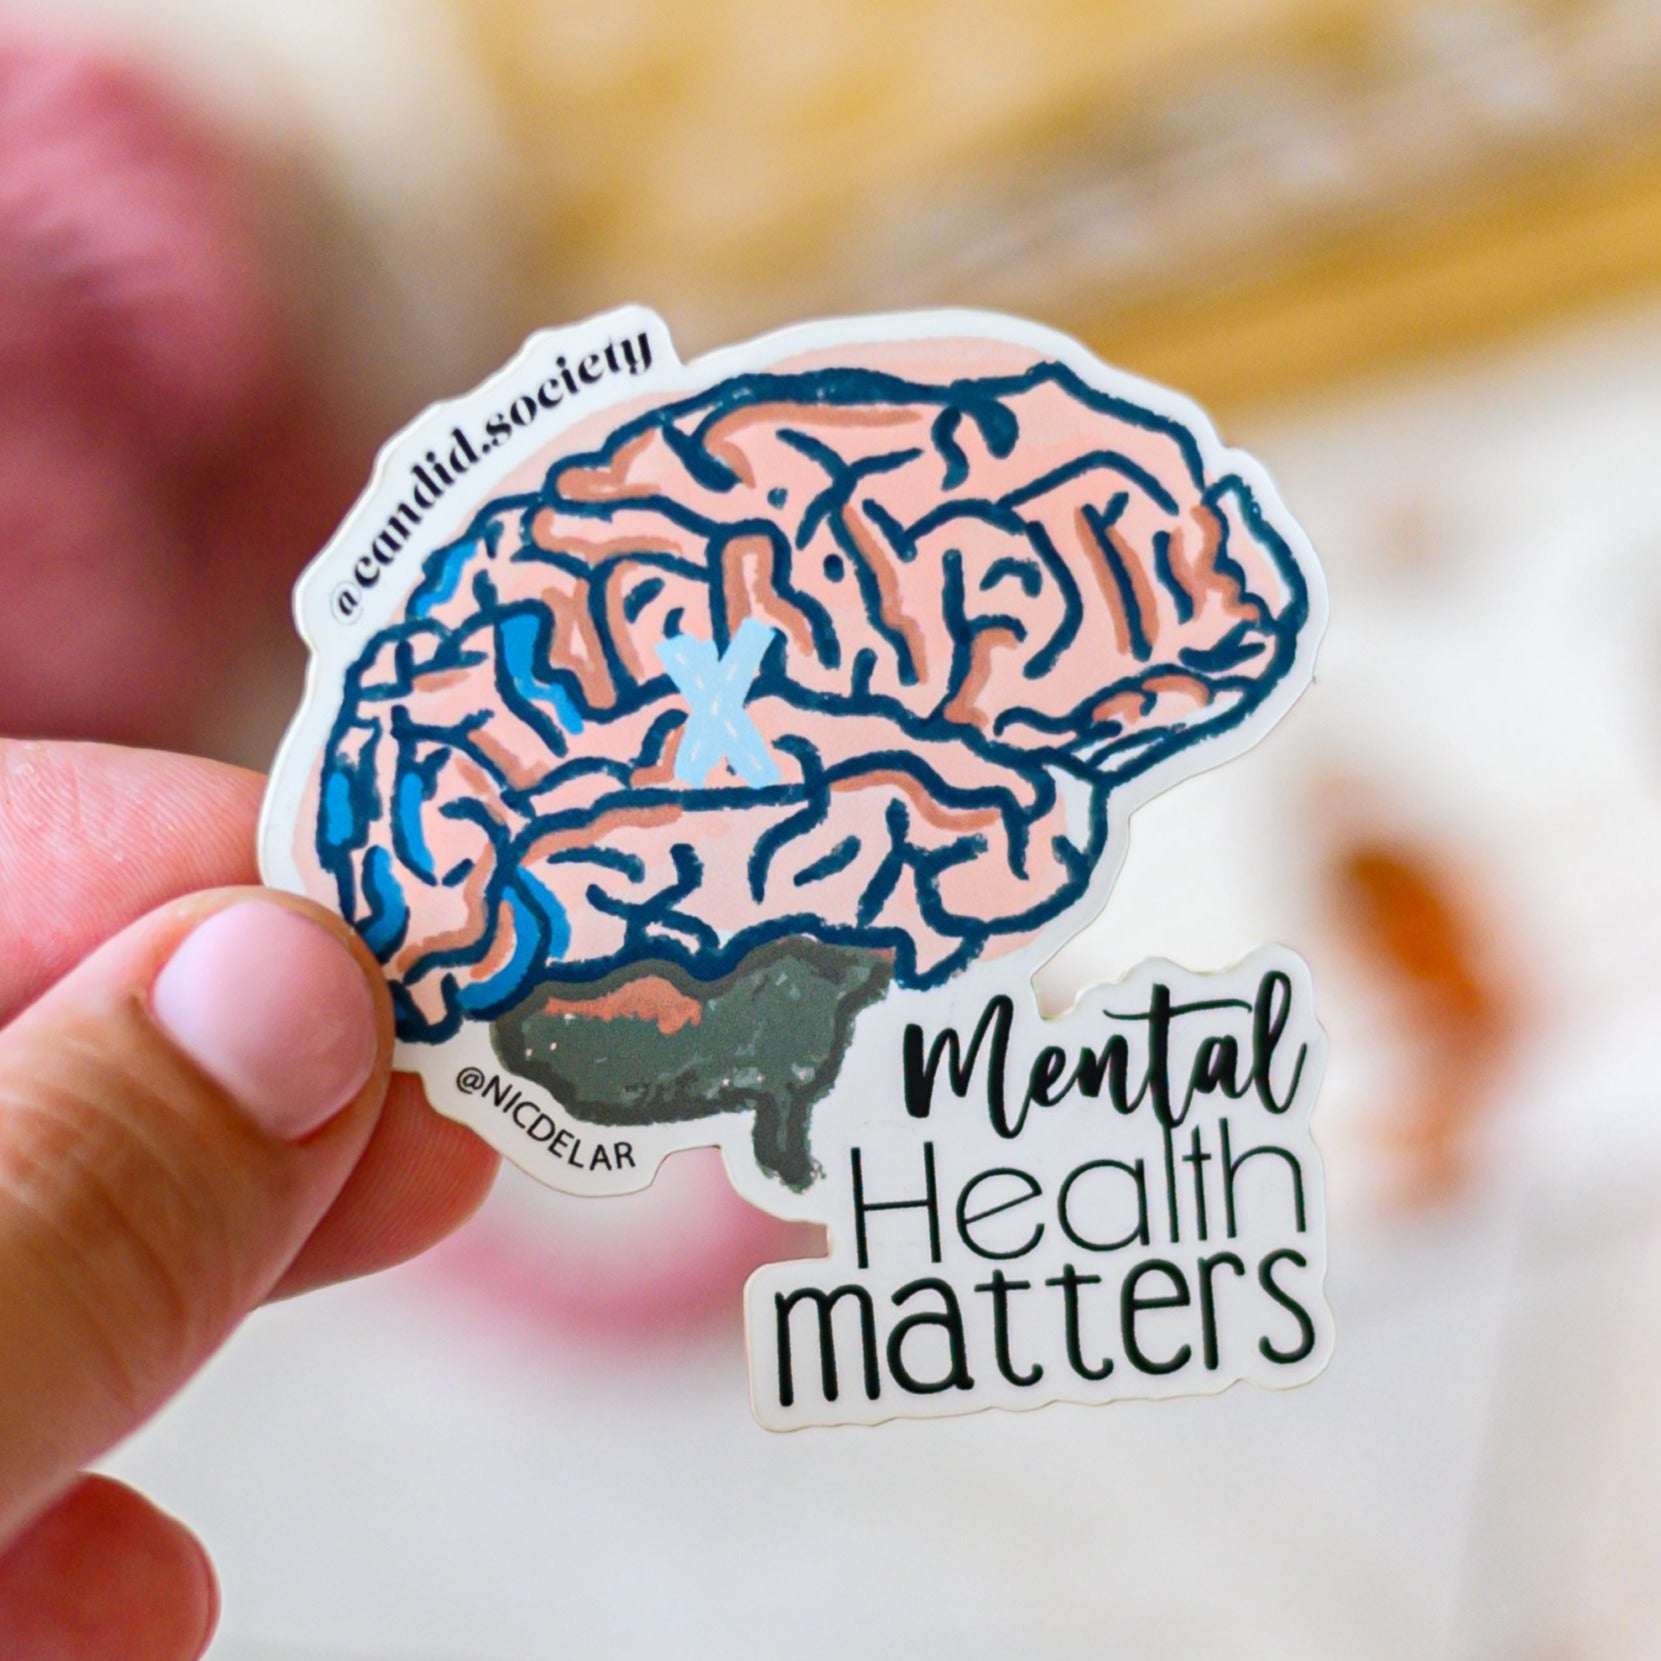 25 - Mental Health Matters (original) - Premium Sticker